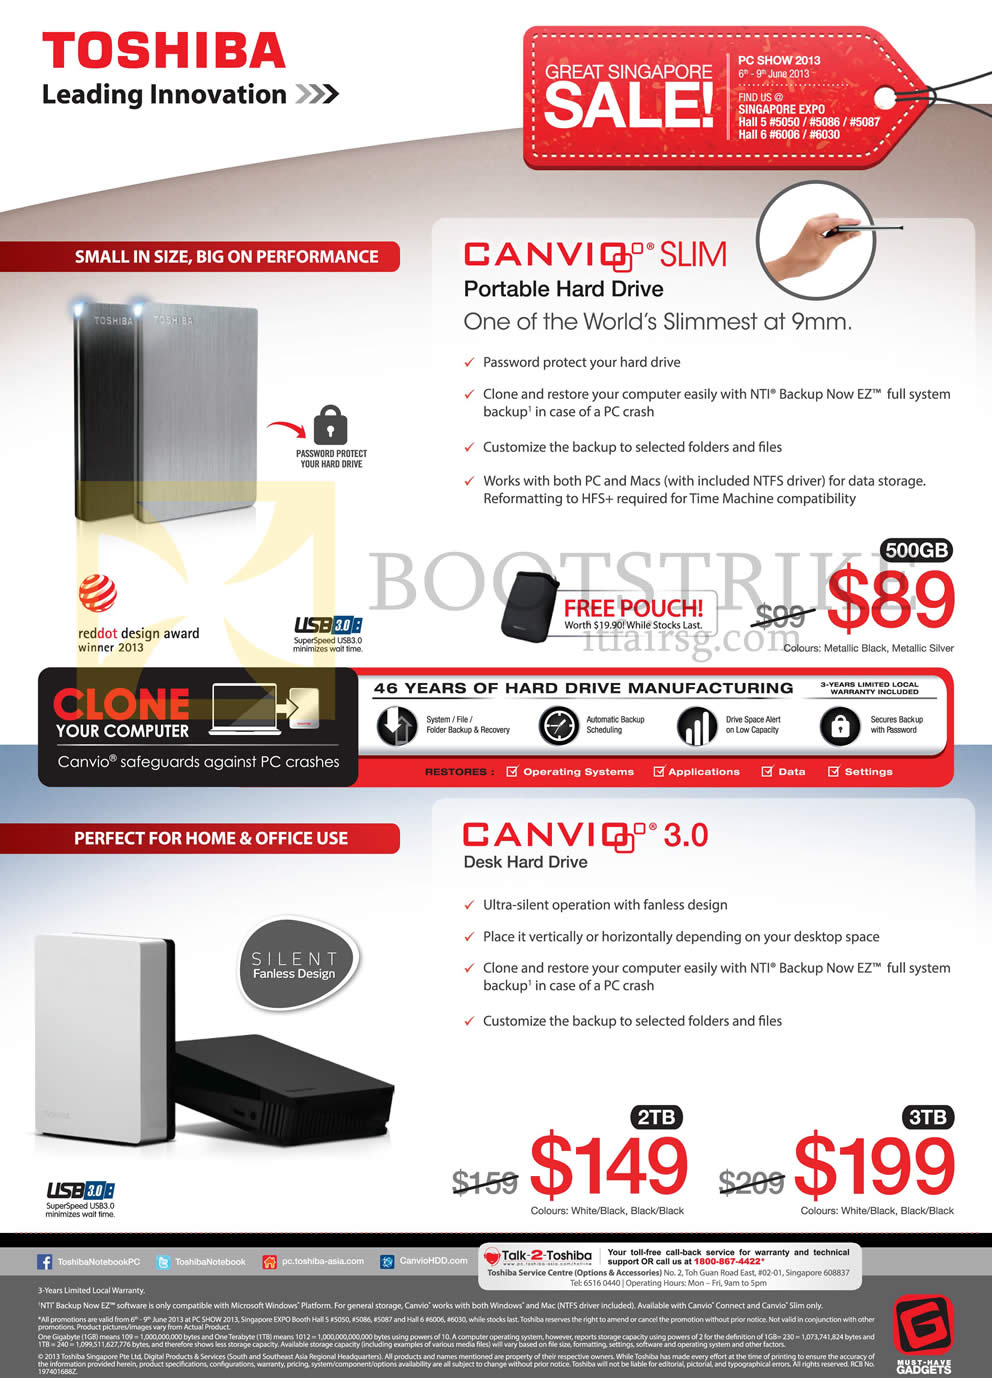 PC SHOW 2013 price list image brochure of Toshiba External Storage USB Canvio Slim, Canvio 3.0 Desk Hard Drive